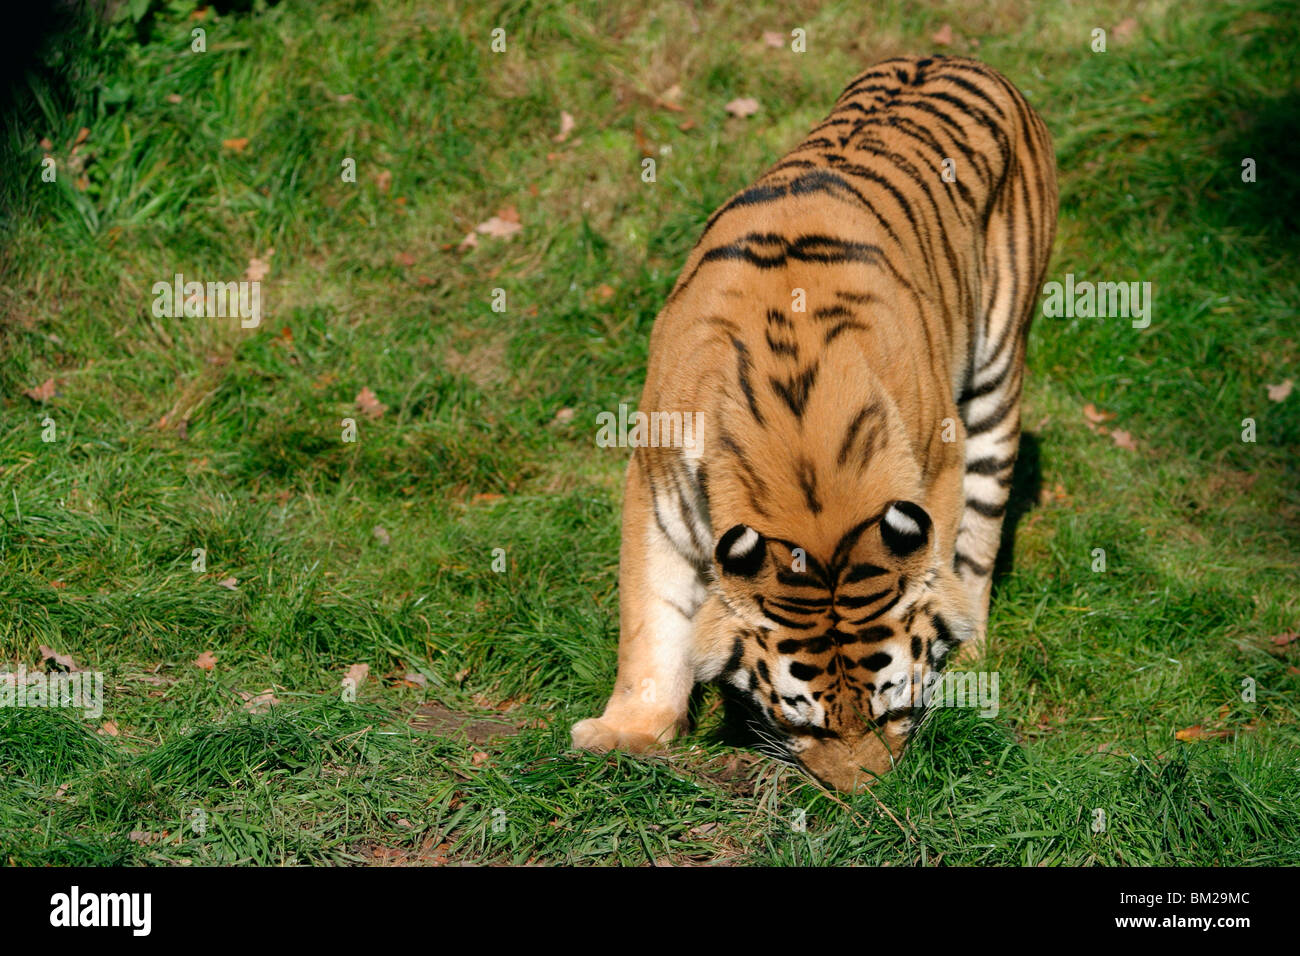 Amurtiger / tiger Stock Photo